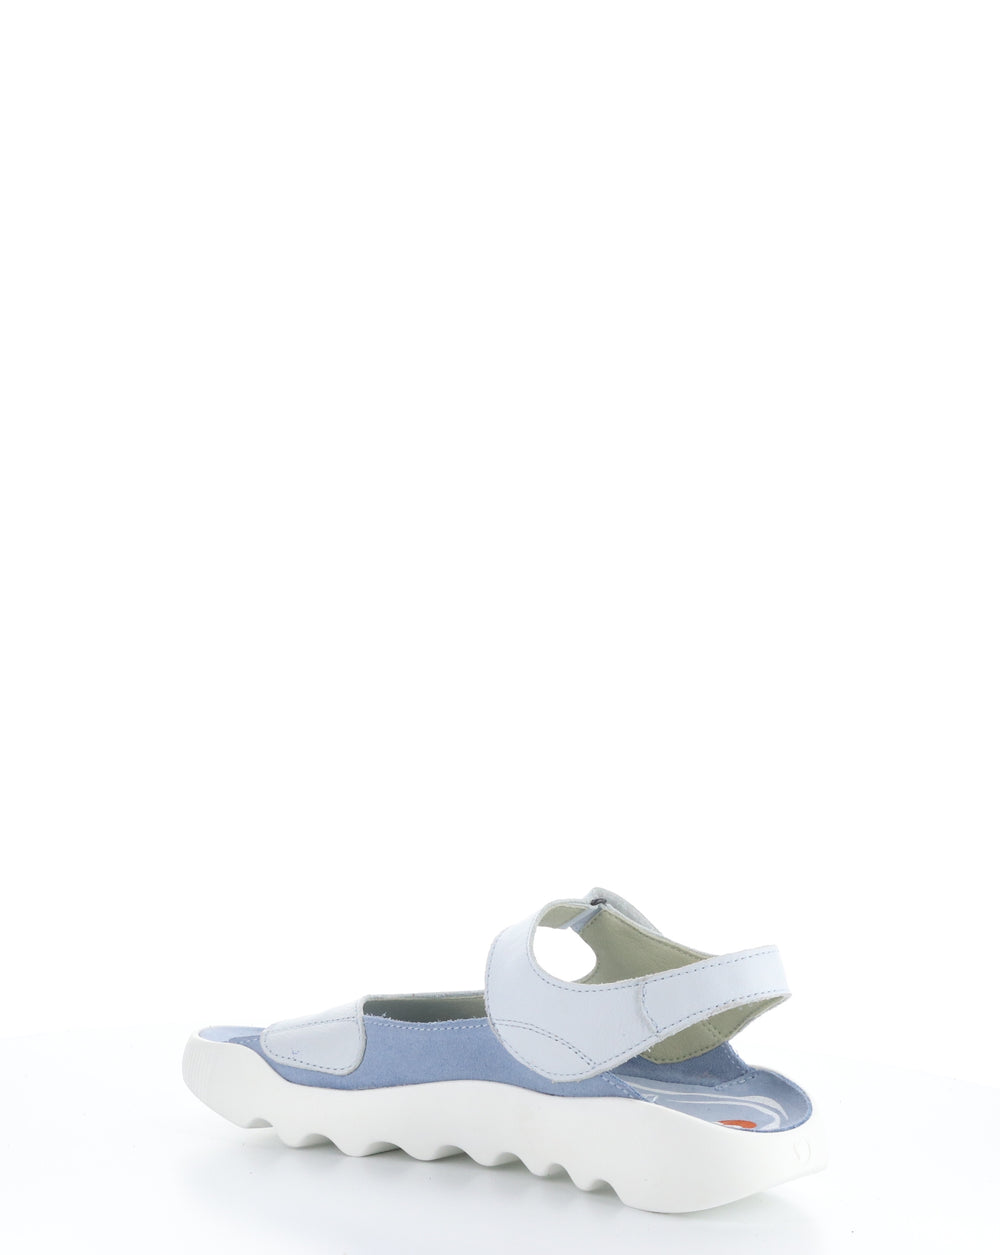 WEAL712SOF 002 LT BLUE Velcro Sandals